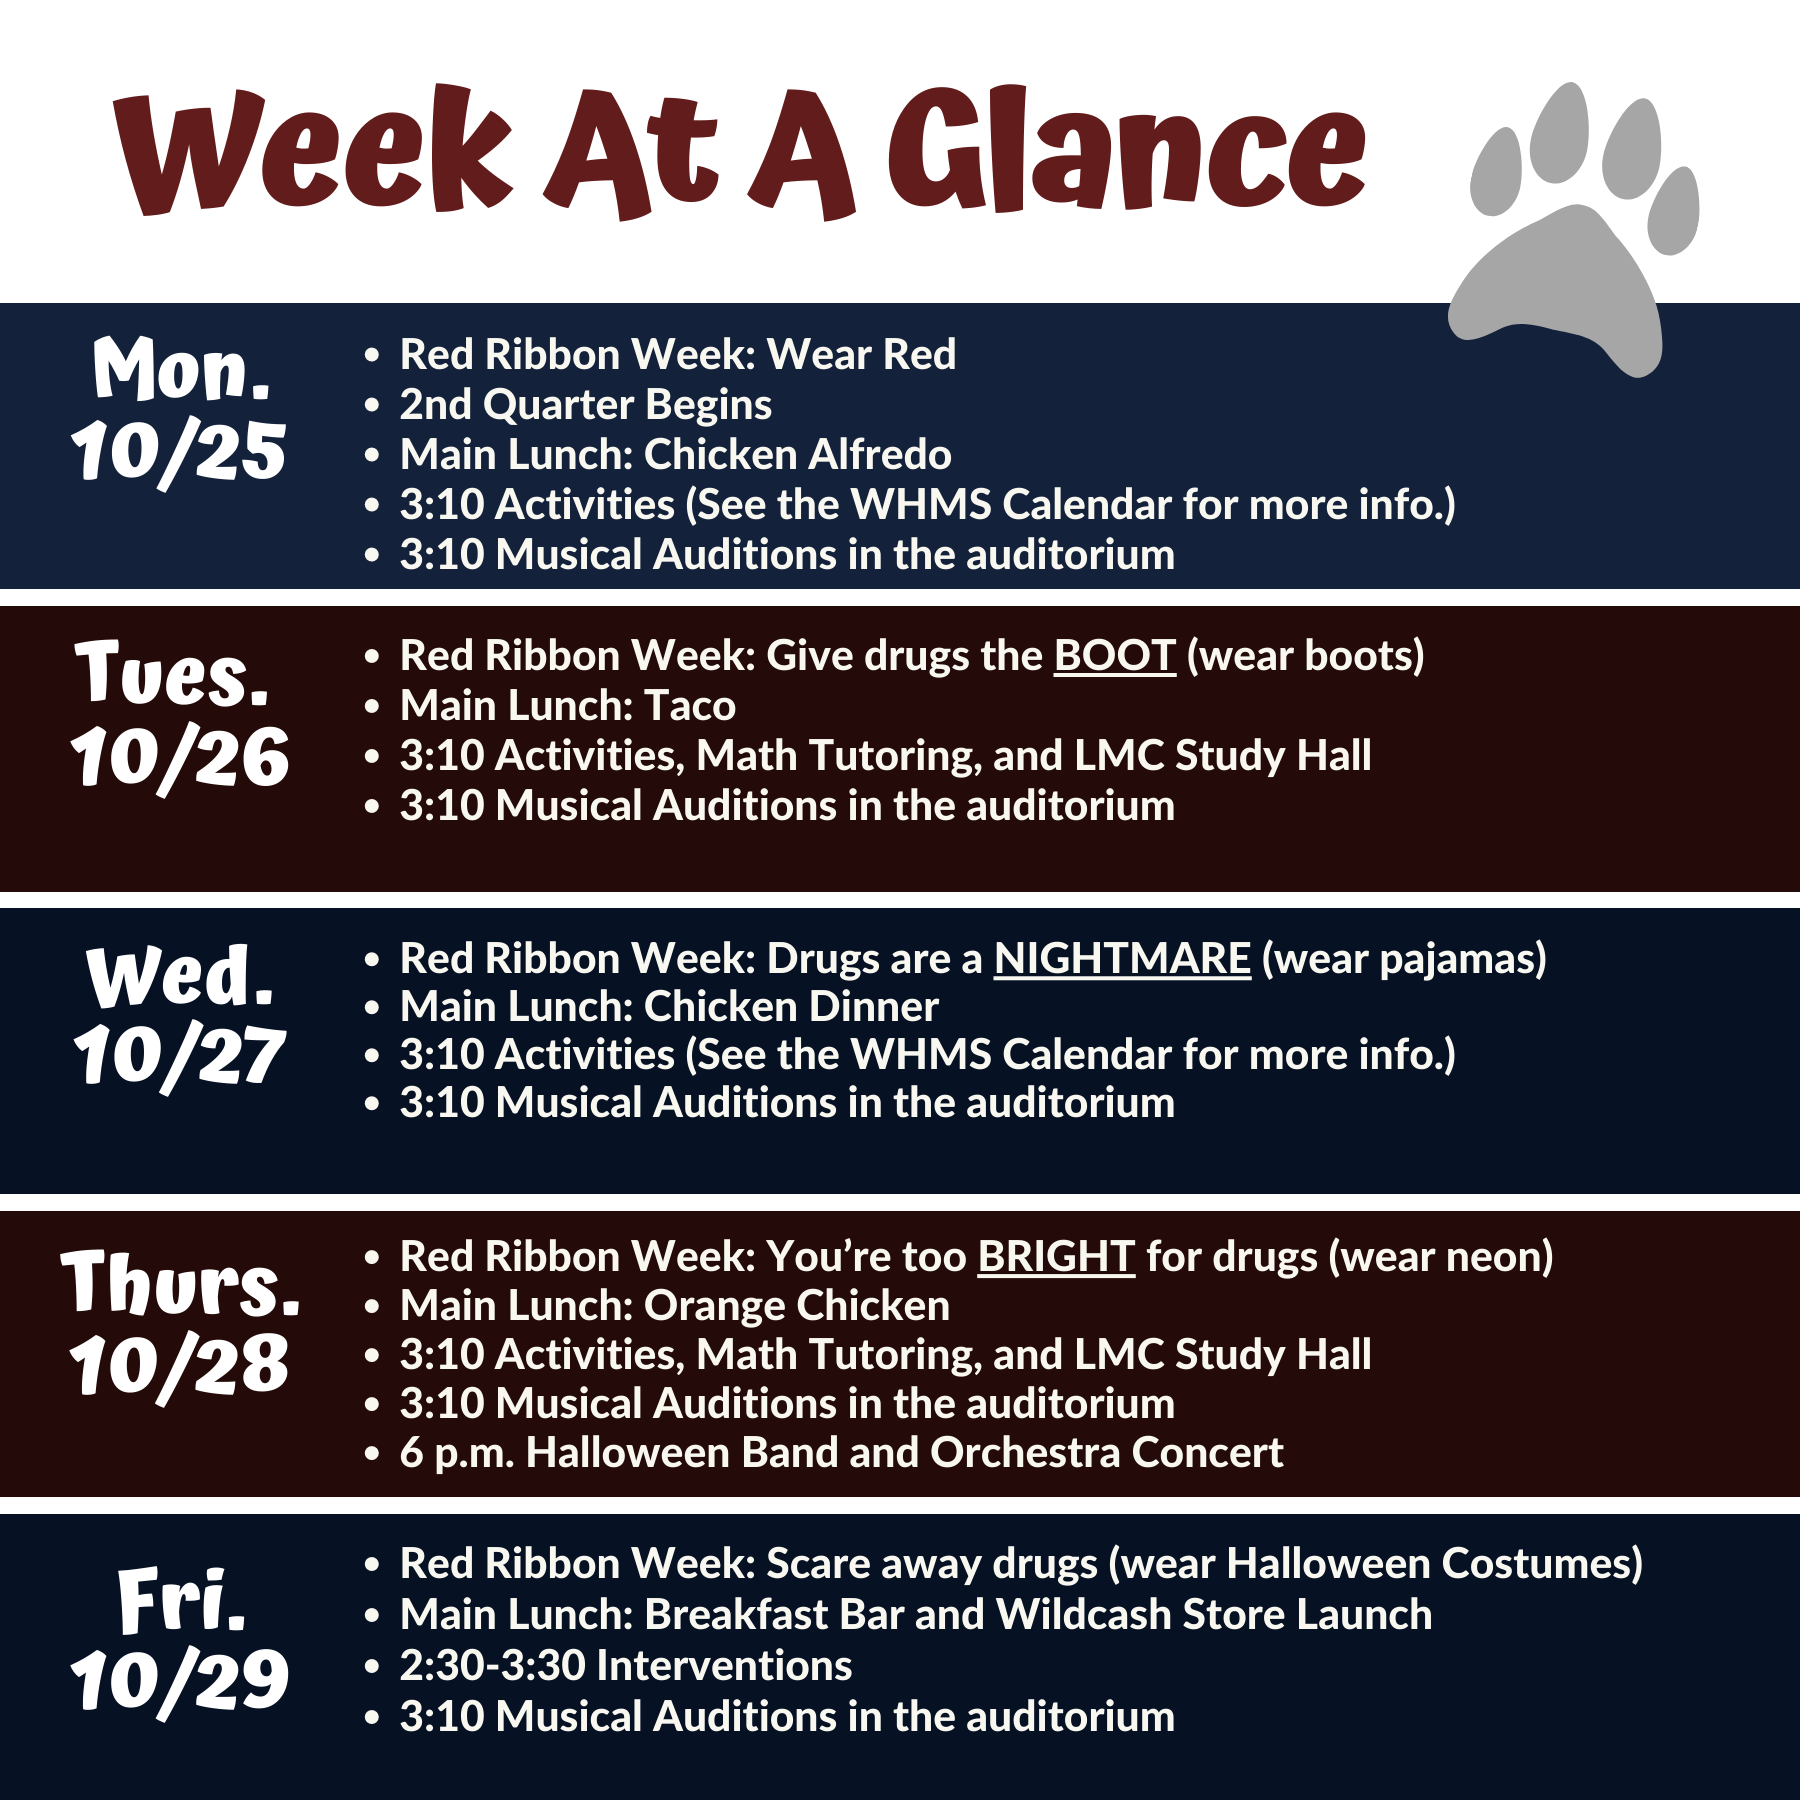 Week At A Glance Calendar Summary